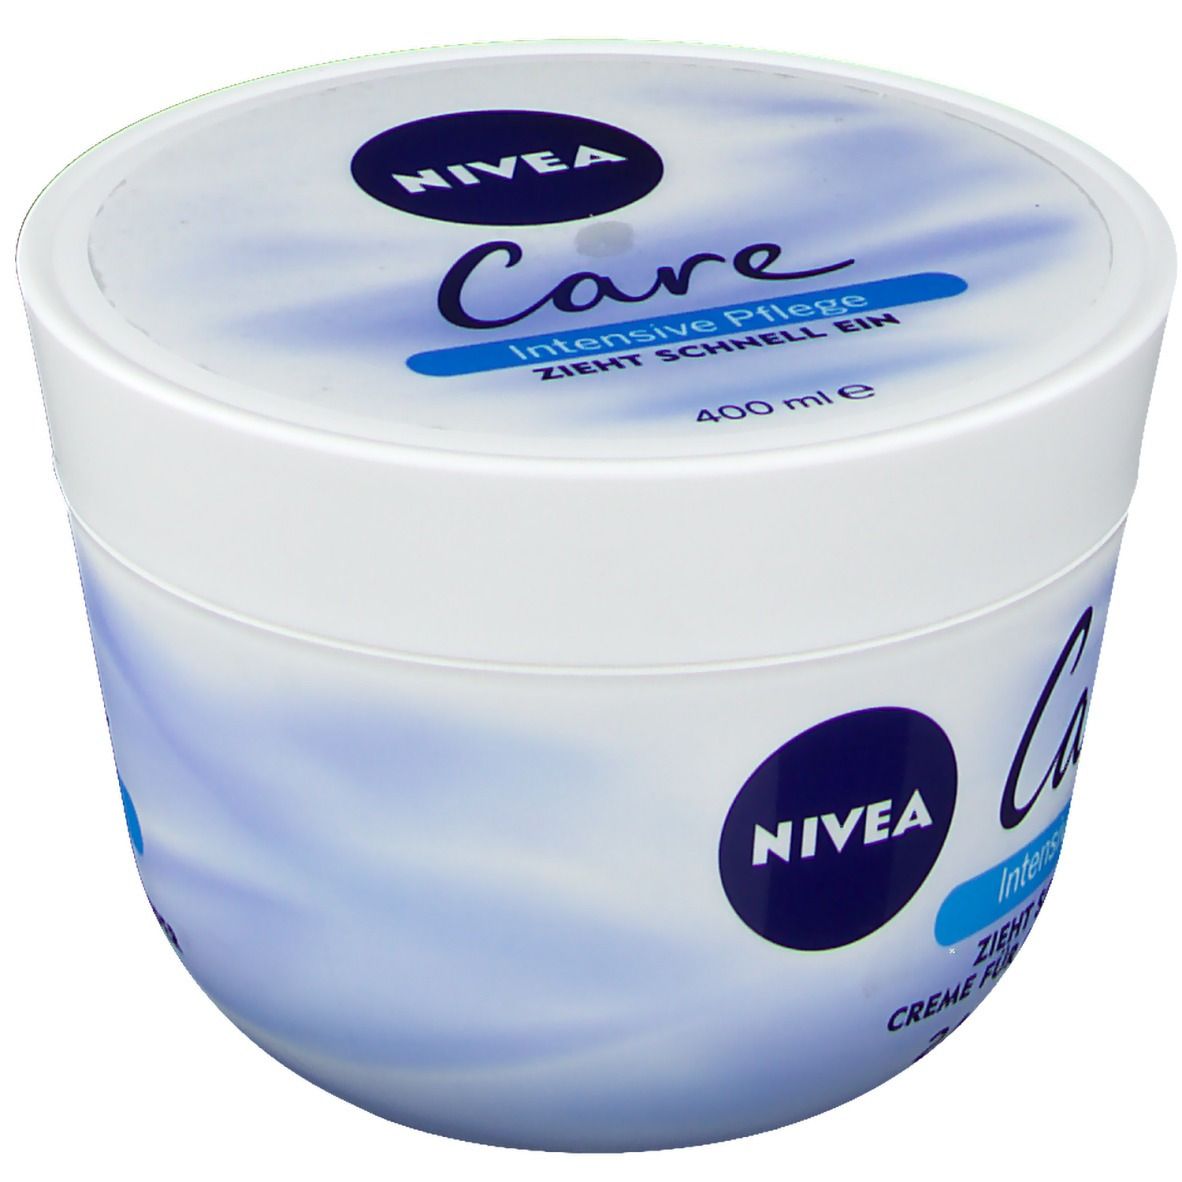 NIVEA® CARE Intensiv Pflege